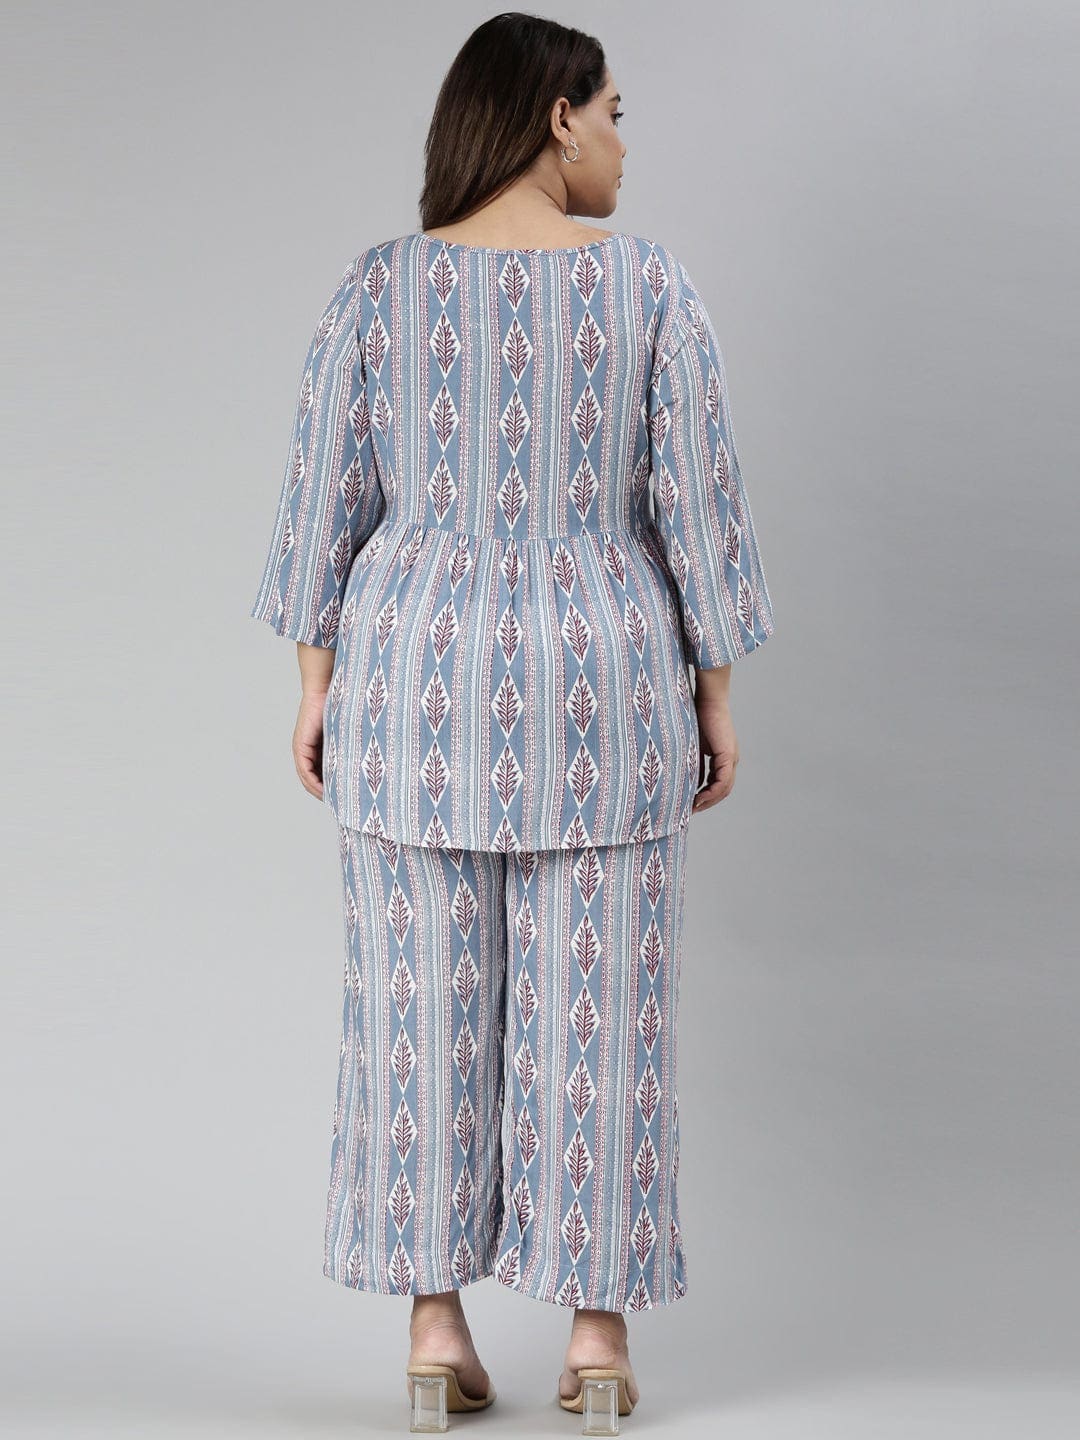 Buy  peplum dress /Women's /Blue ethnic printed /peplum top /palazzo pant on online from the Shailinic printed /peplum top /palazzo pant on online from the Shaili